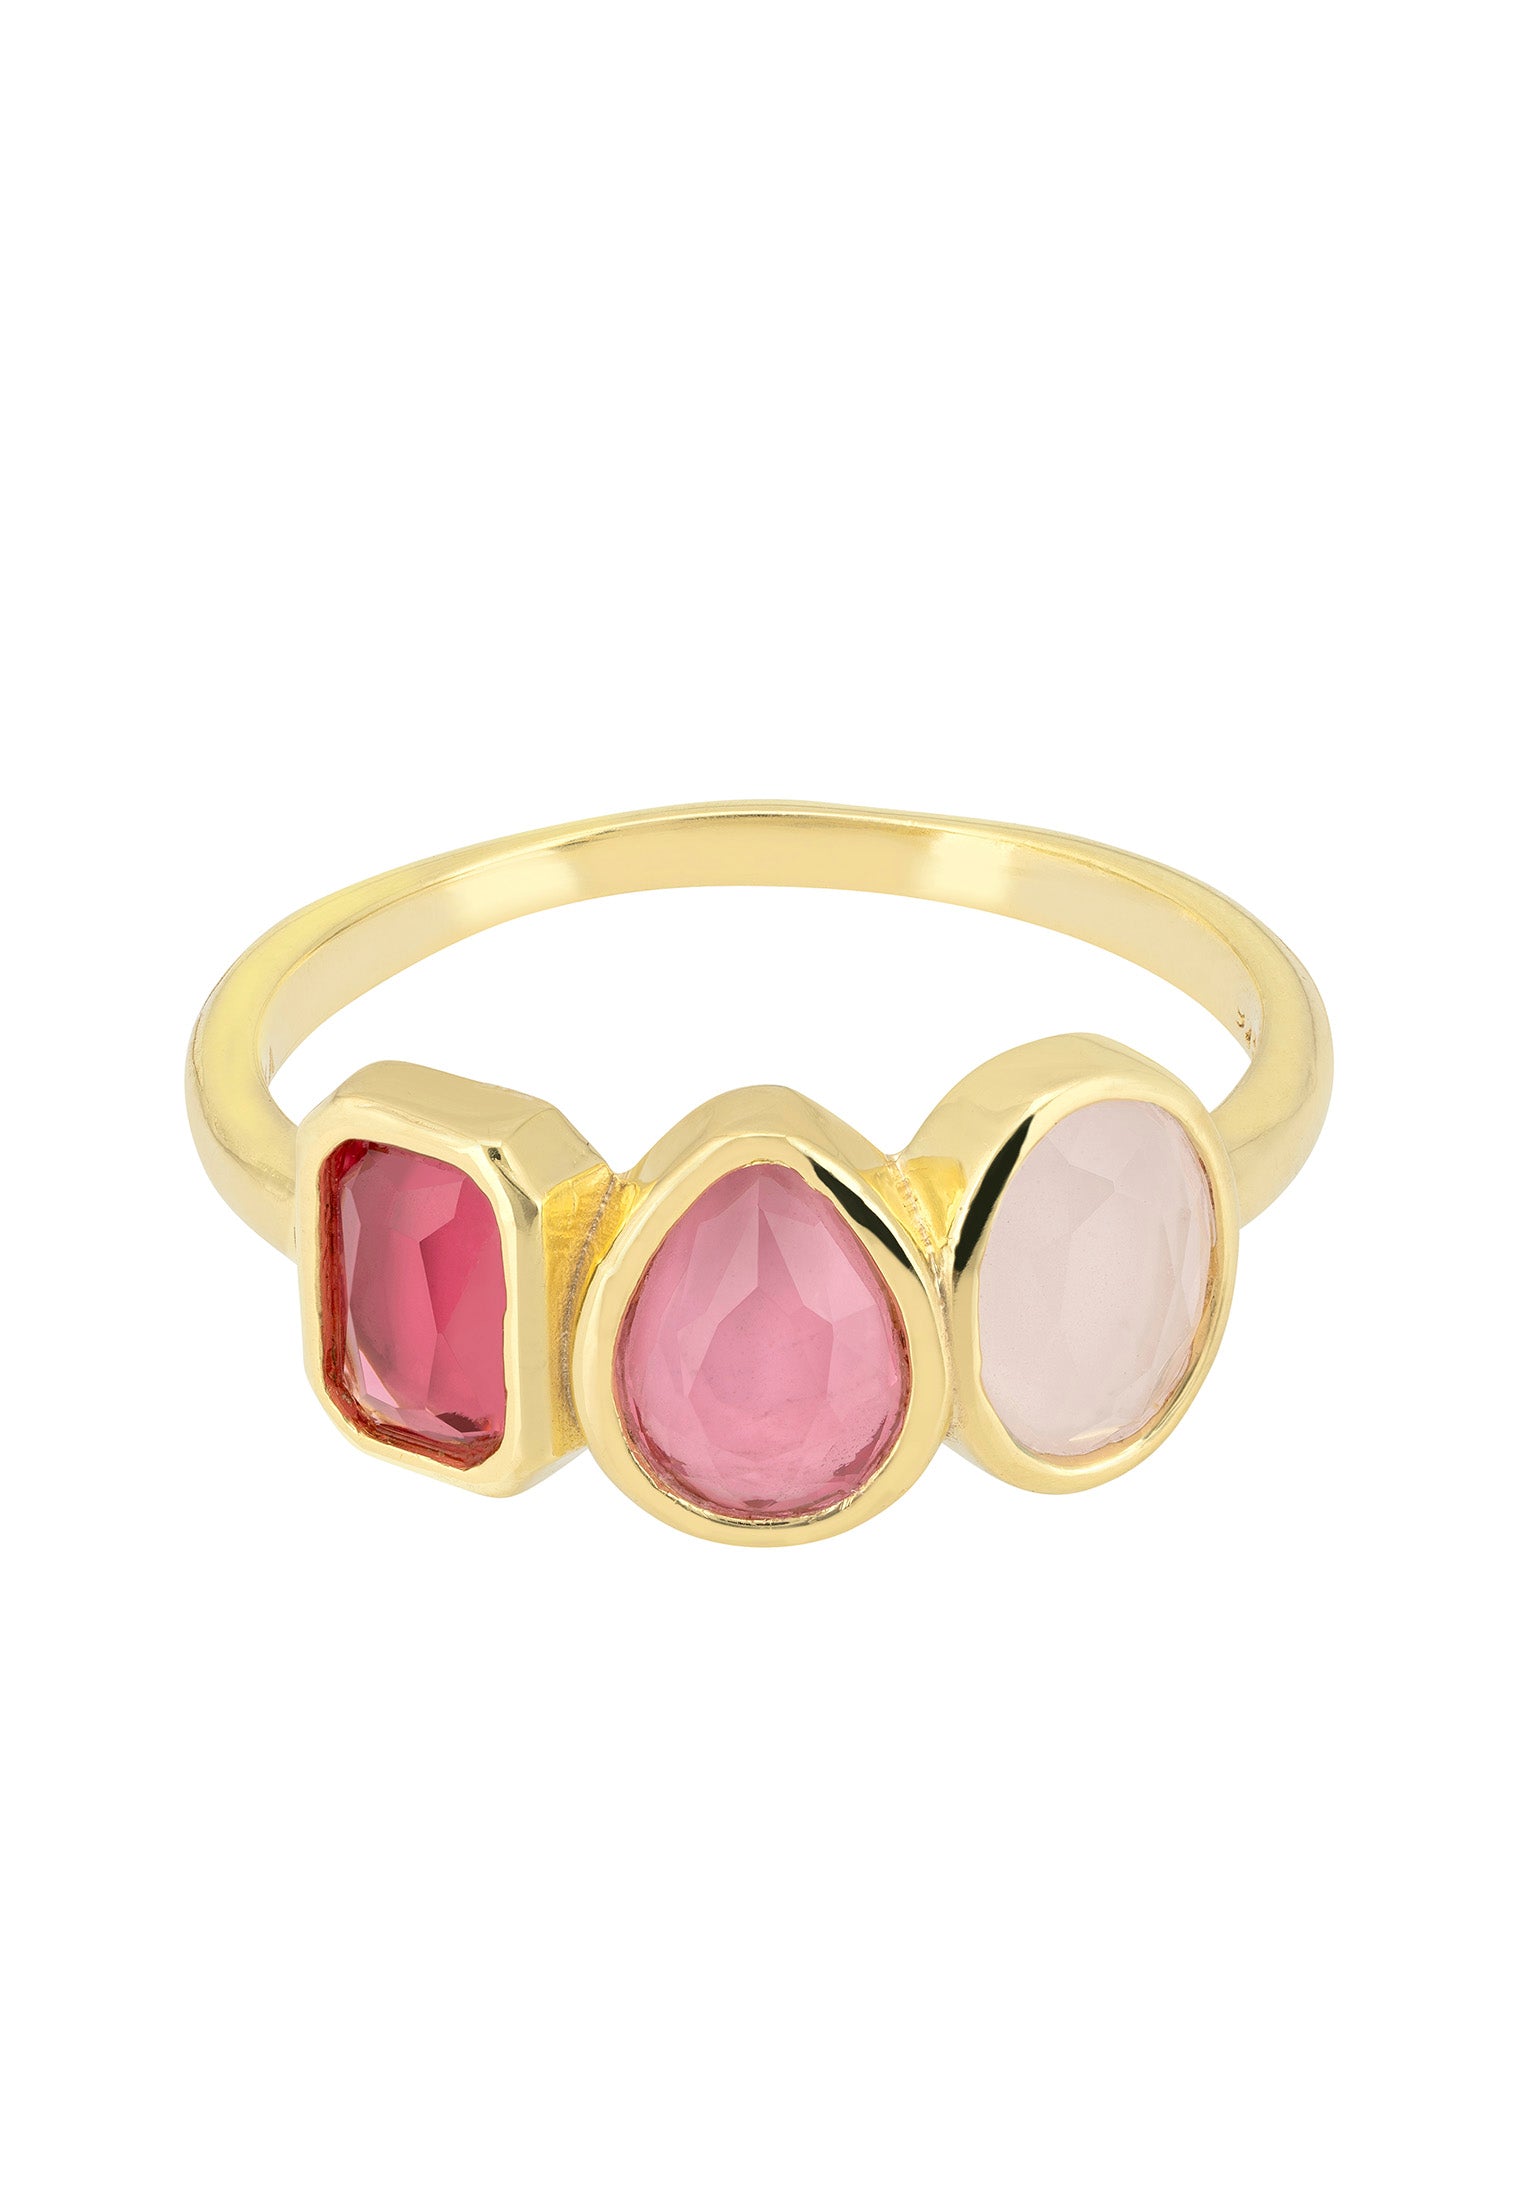 Verona Triple Gemstone Ring Gold The Pinks